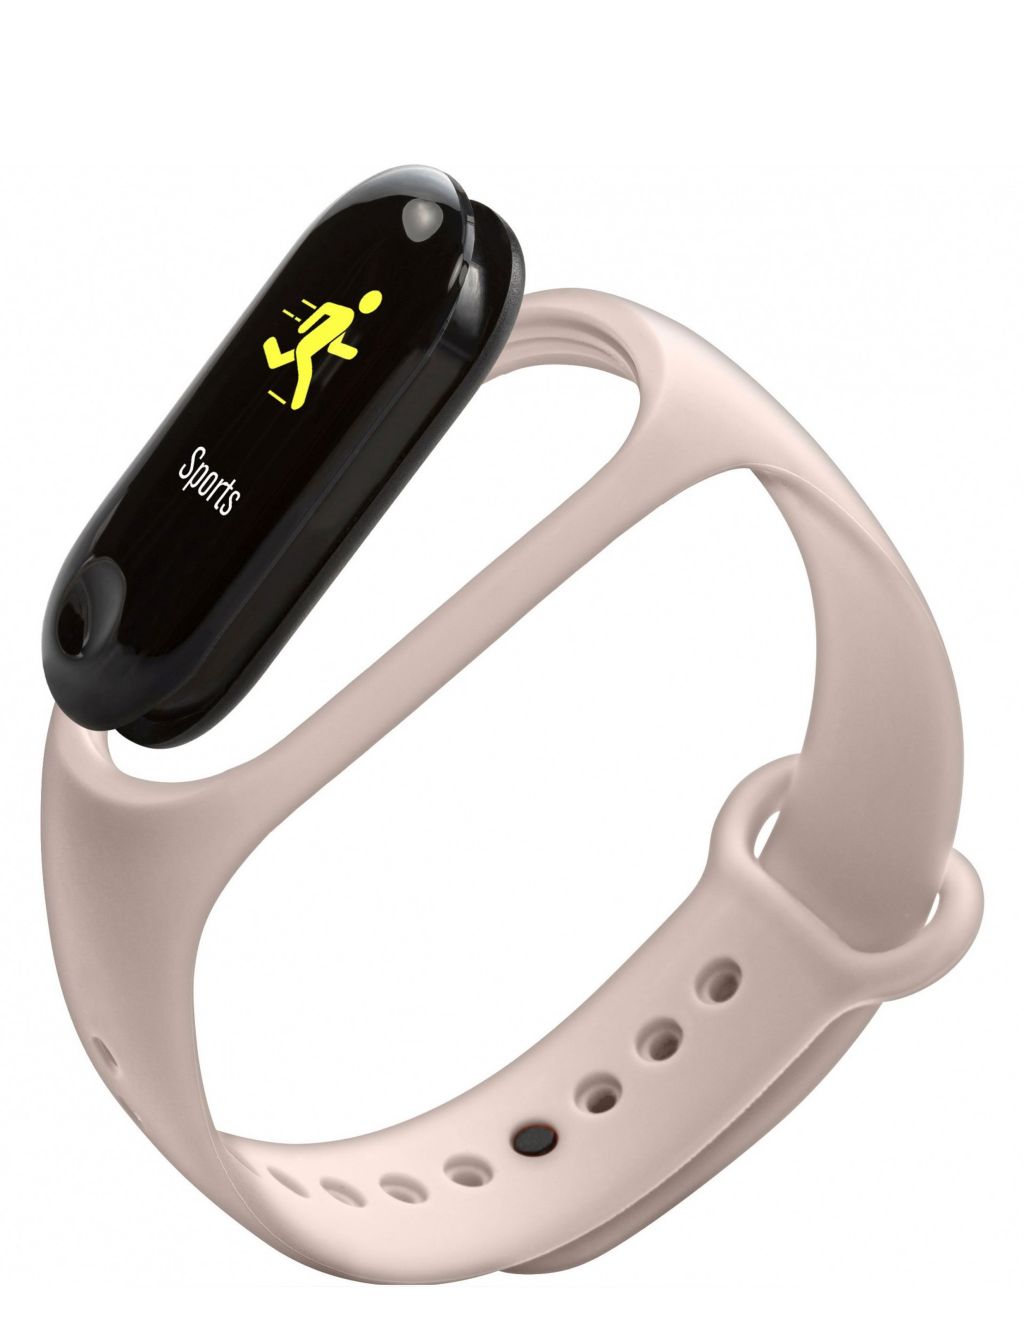 Reflex Active Pink Rubber Smart Watch image 2